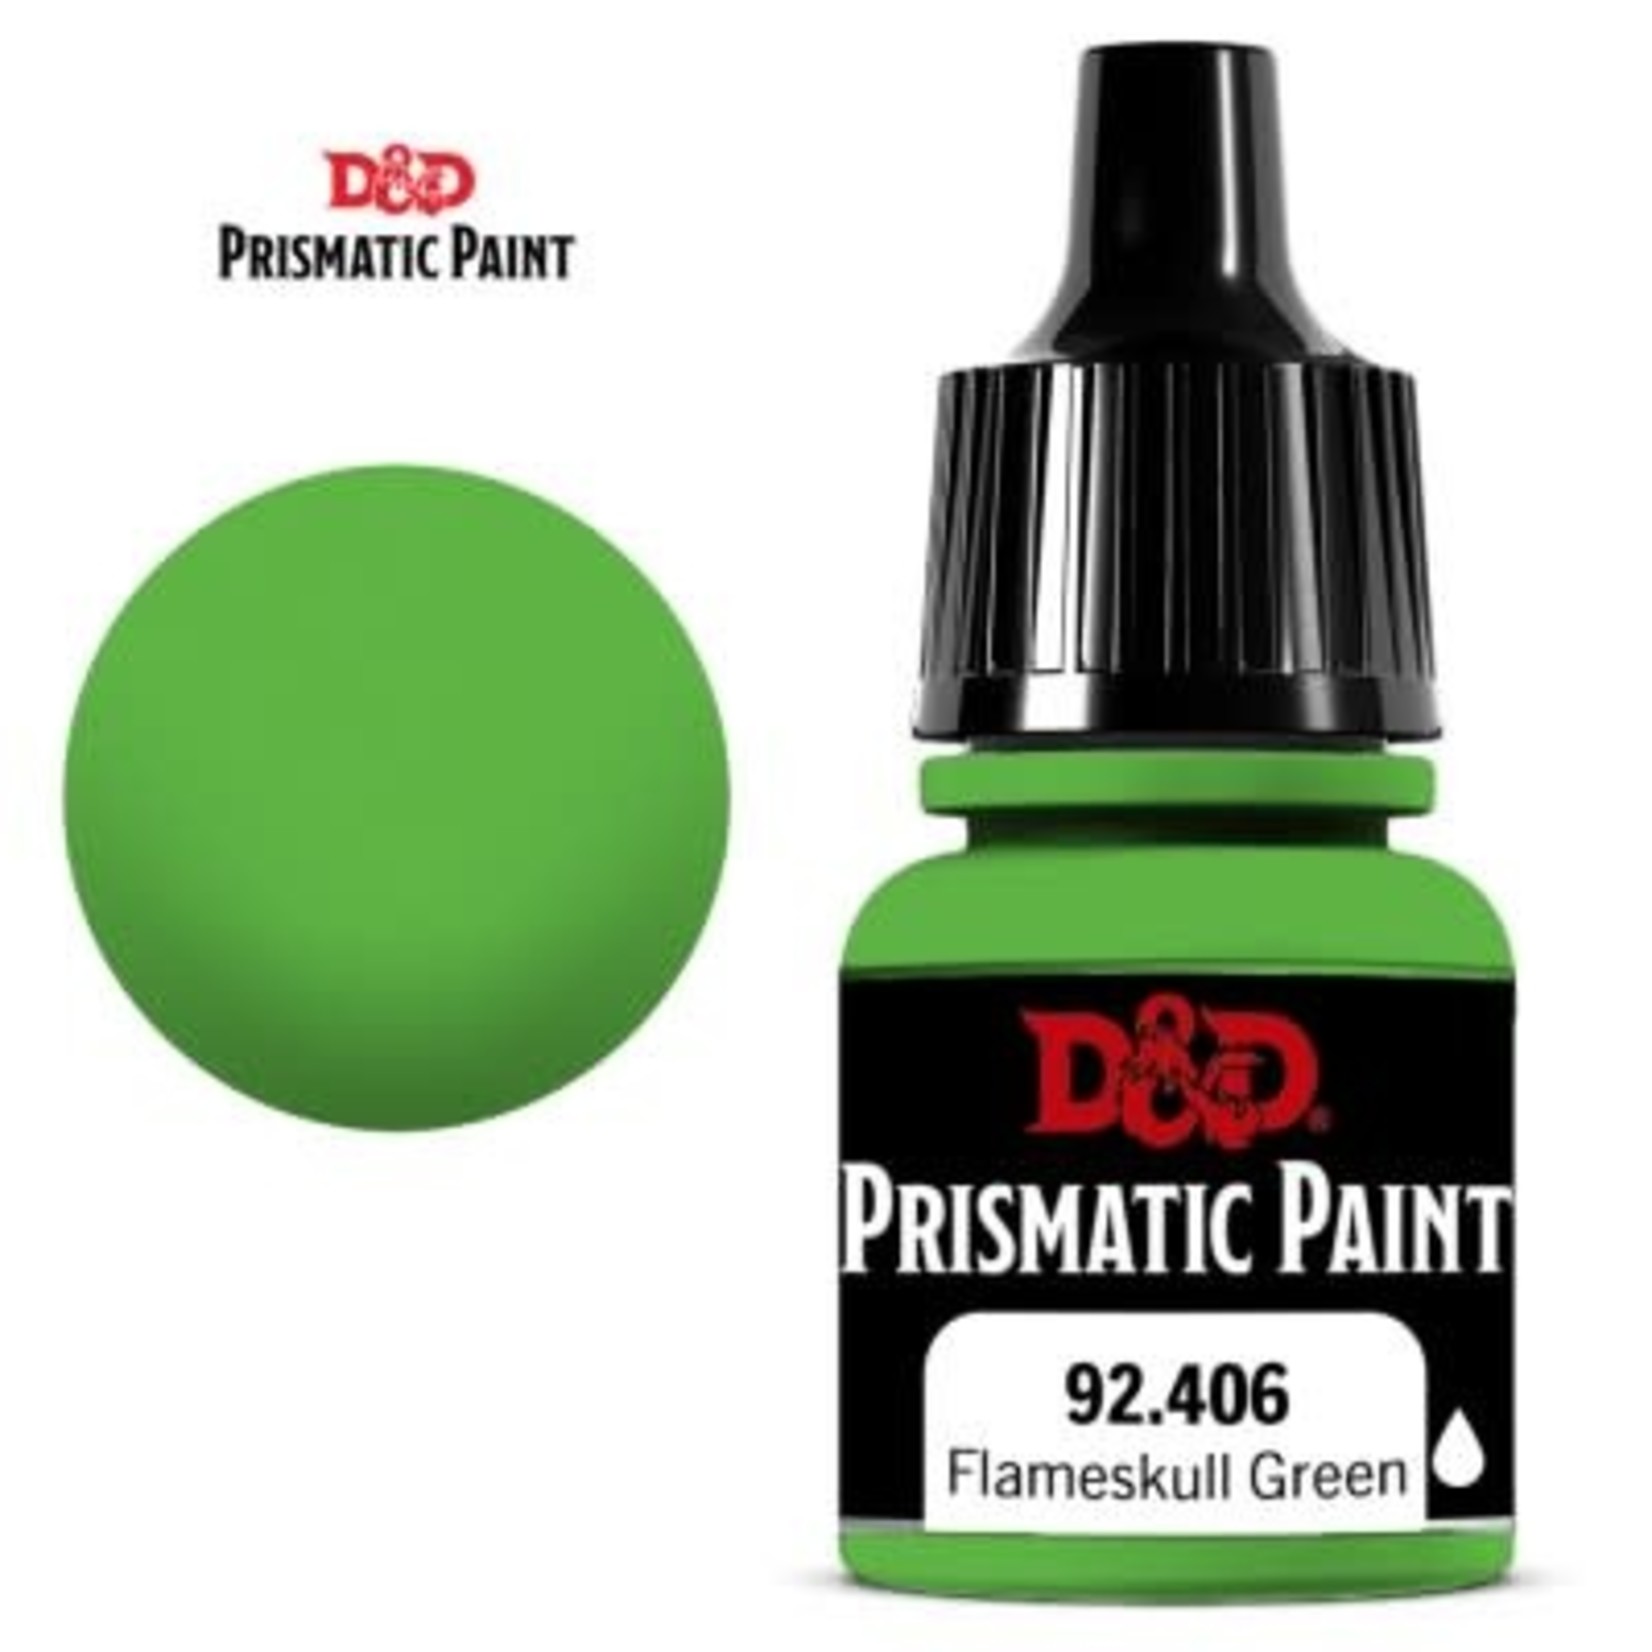 WizKids/Neca 67120 Prismatic Paint: FLAMESKULL GREEN